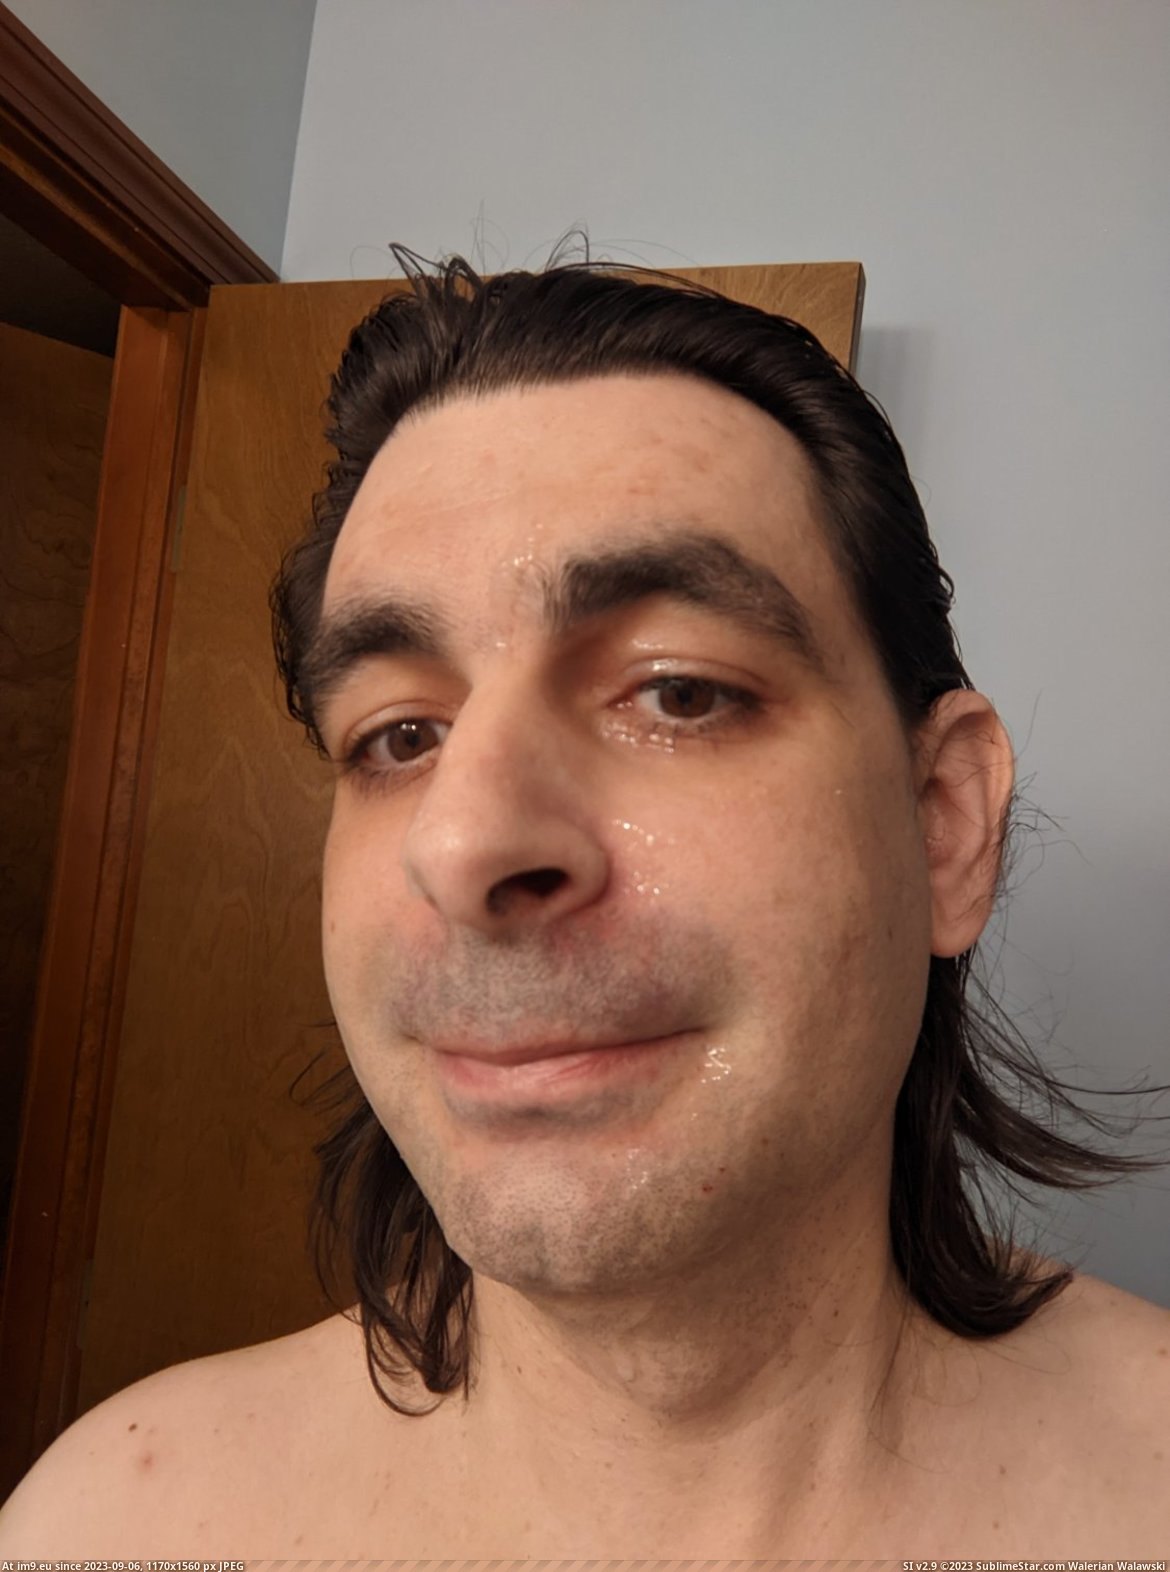 Pic Exposed Blowjob Submissive Faggot Pierced 166952B  